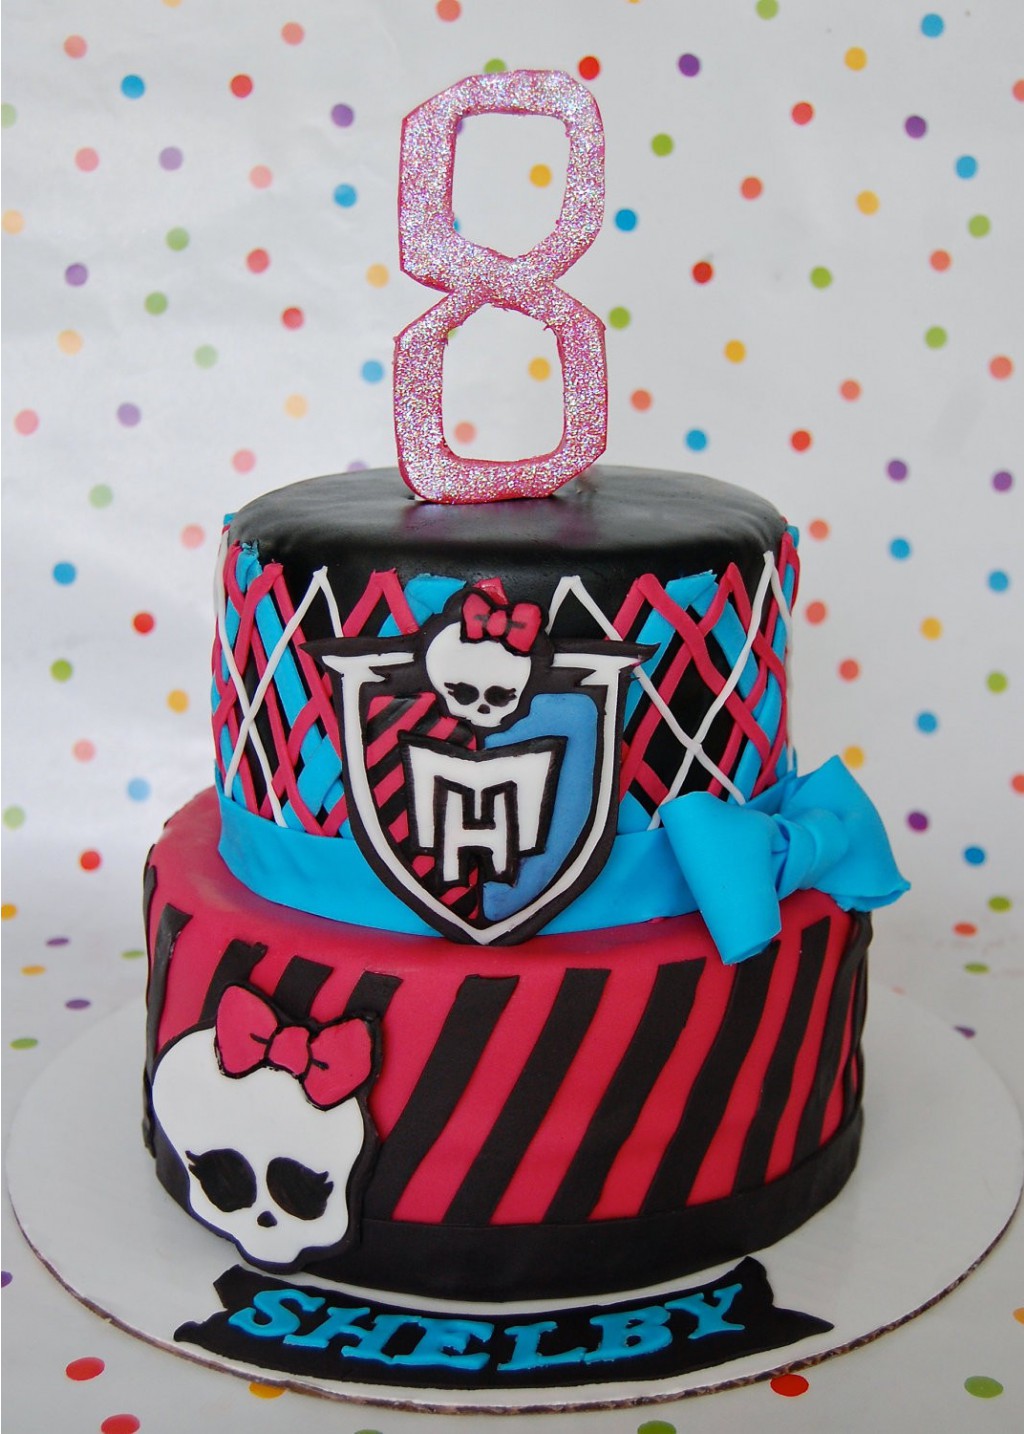 Monster high birthday cake pictures.jpg